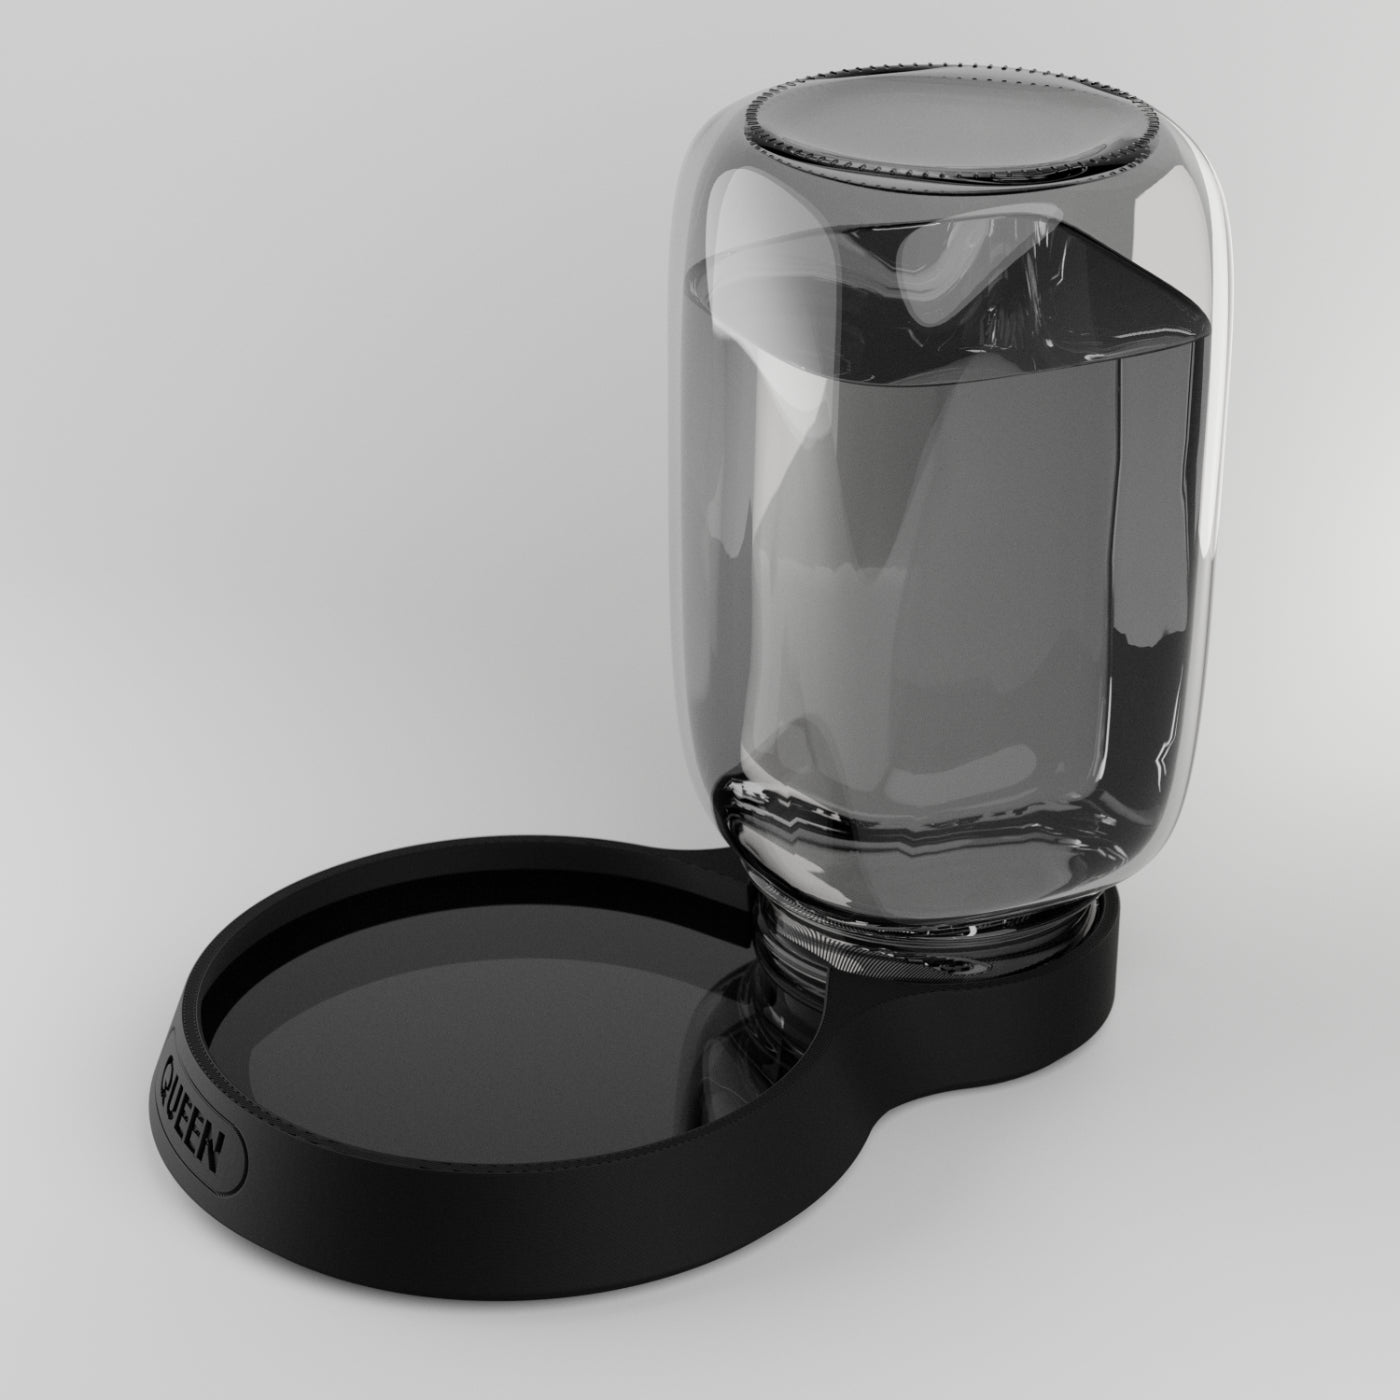 Water dispenser in black